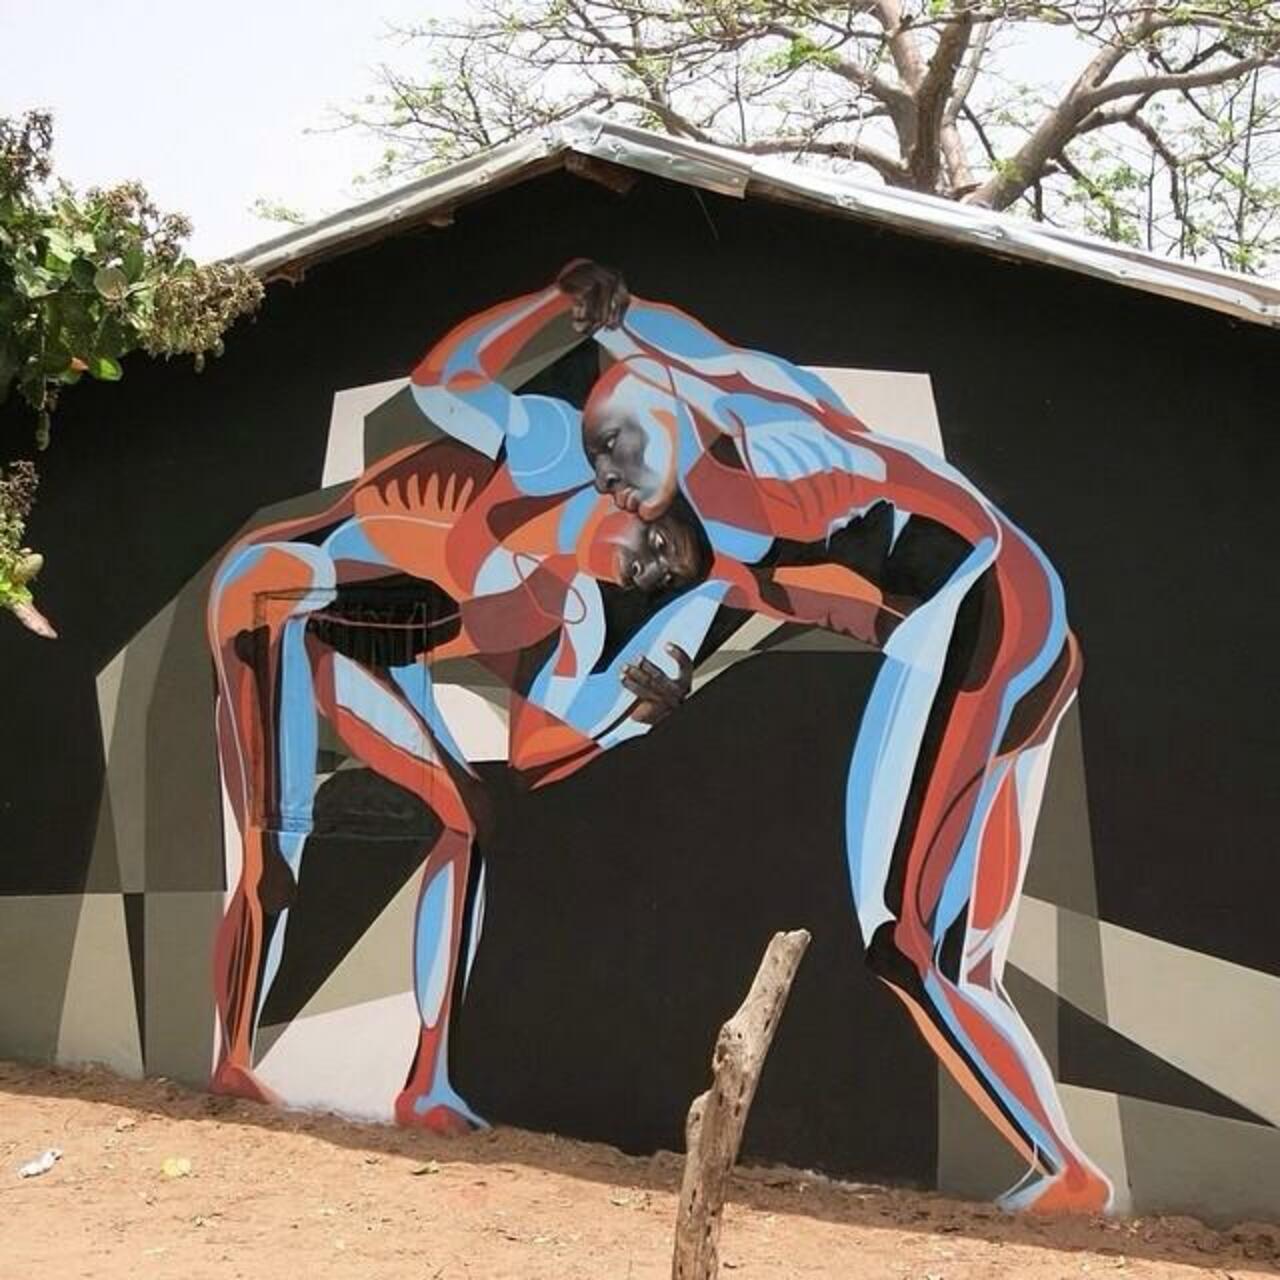 Artist 'Best Ever' new Street Art for the wide open walls in Galoya, The Gambia #art #graffiti #mural #streetart http://t.co/s8wPJVICzH